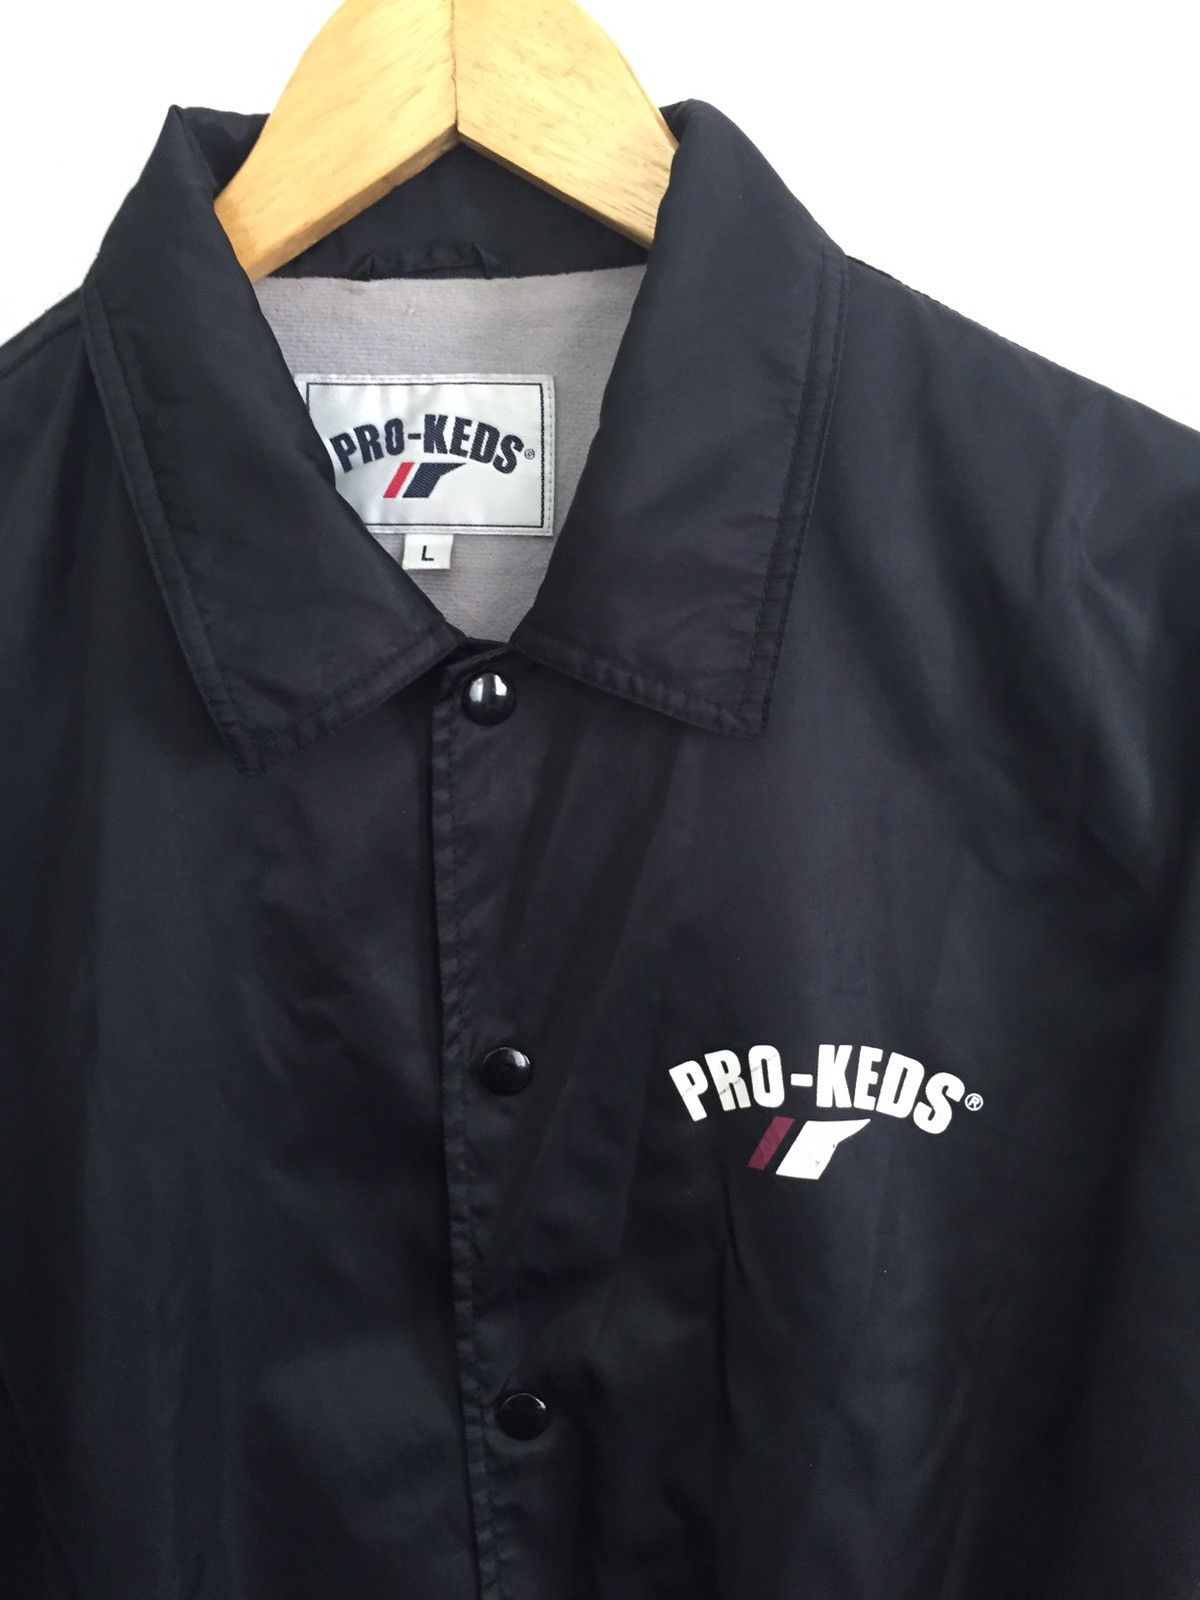 Pro Keds PRO-KEDS Size L Big Logo Spell Out Button Jacket Size US L / EU 52-54 / 3 - 3 Thumbnail